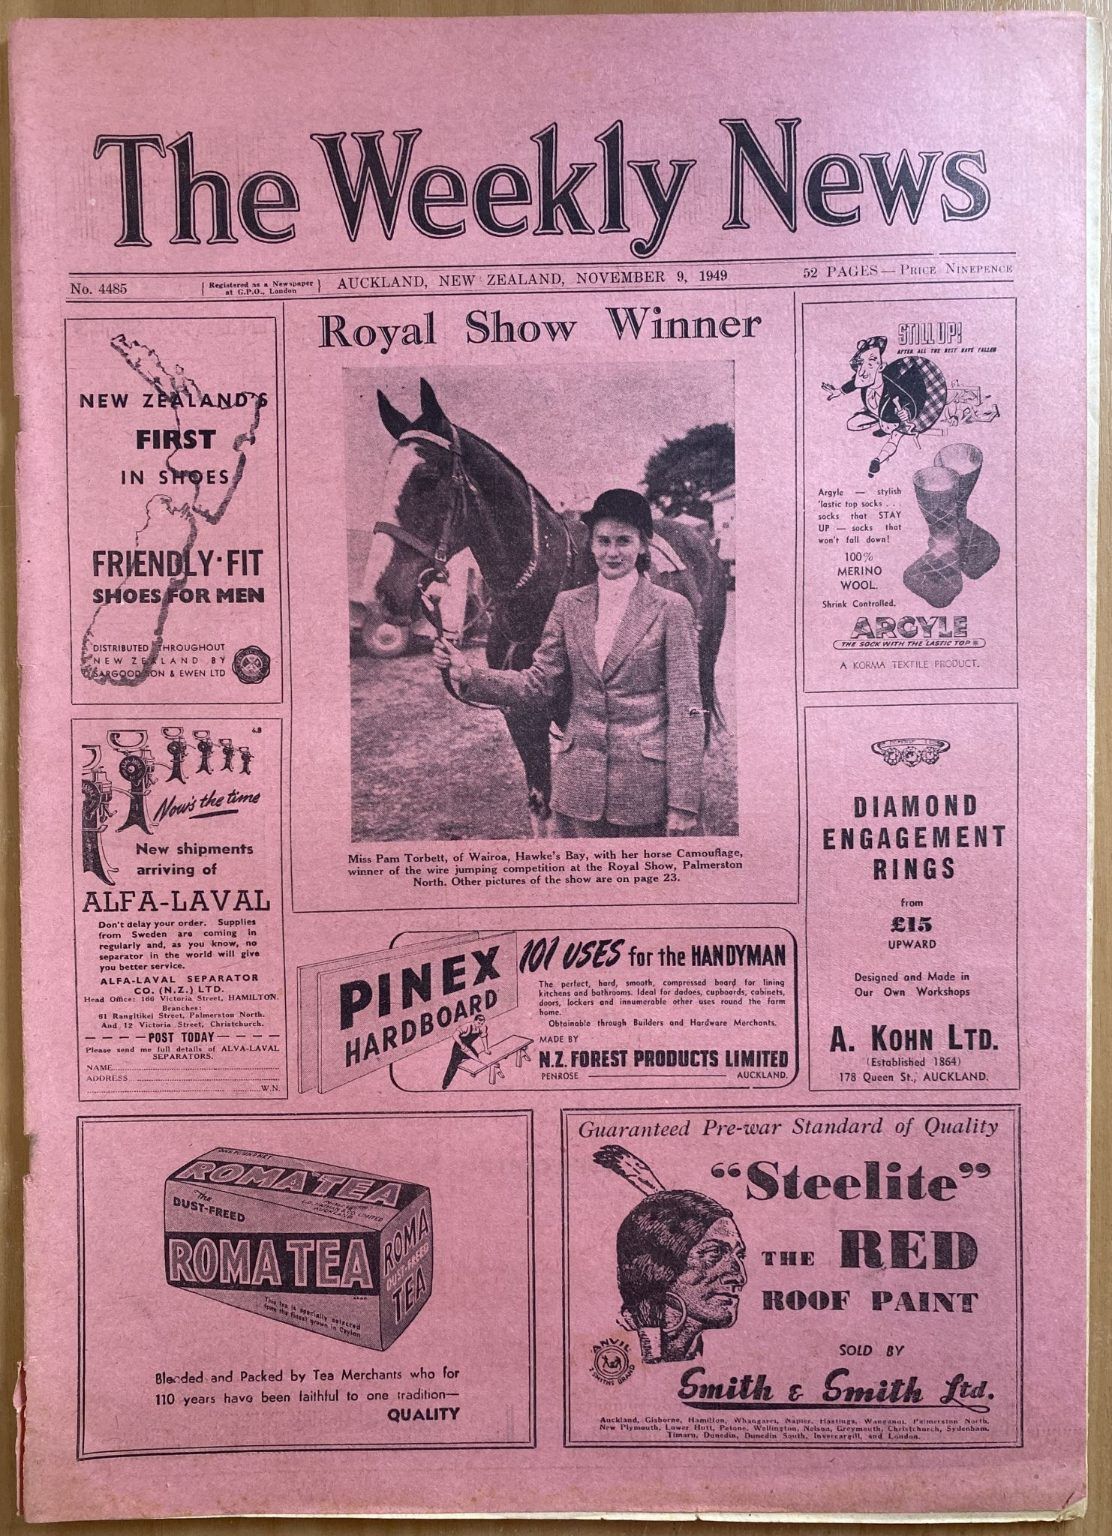 OLD NEWSPAPER: The Weekly News, No. 4485, 9 November 1949